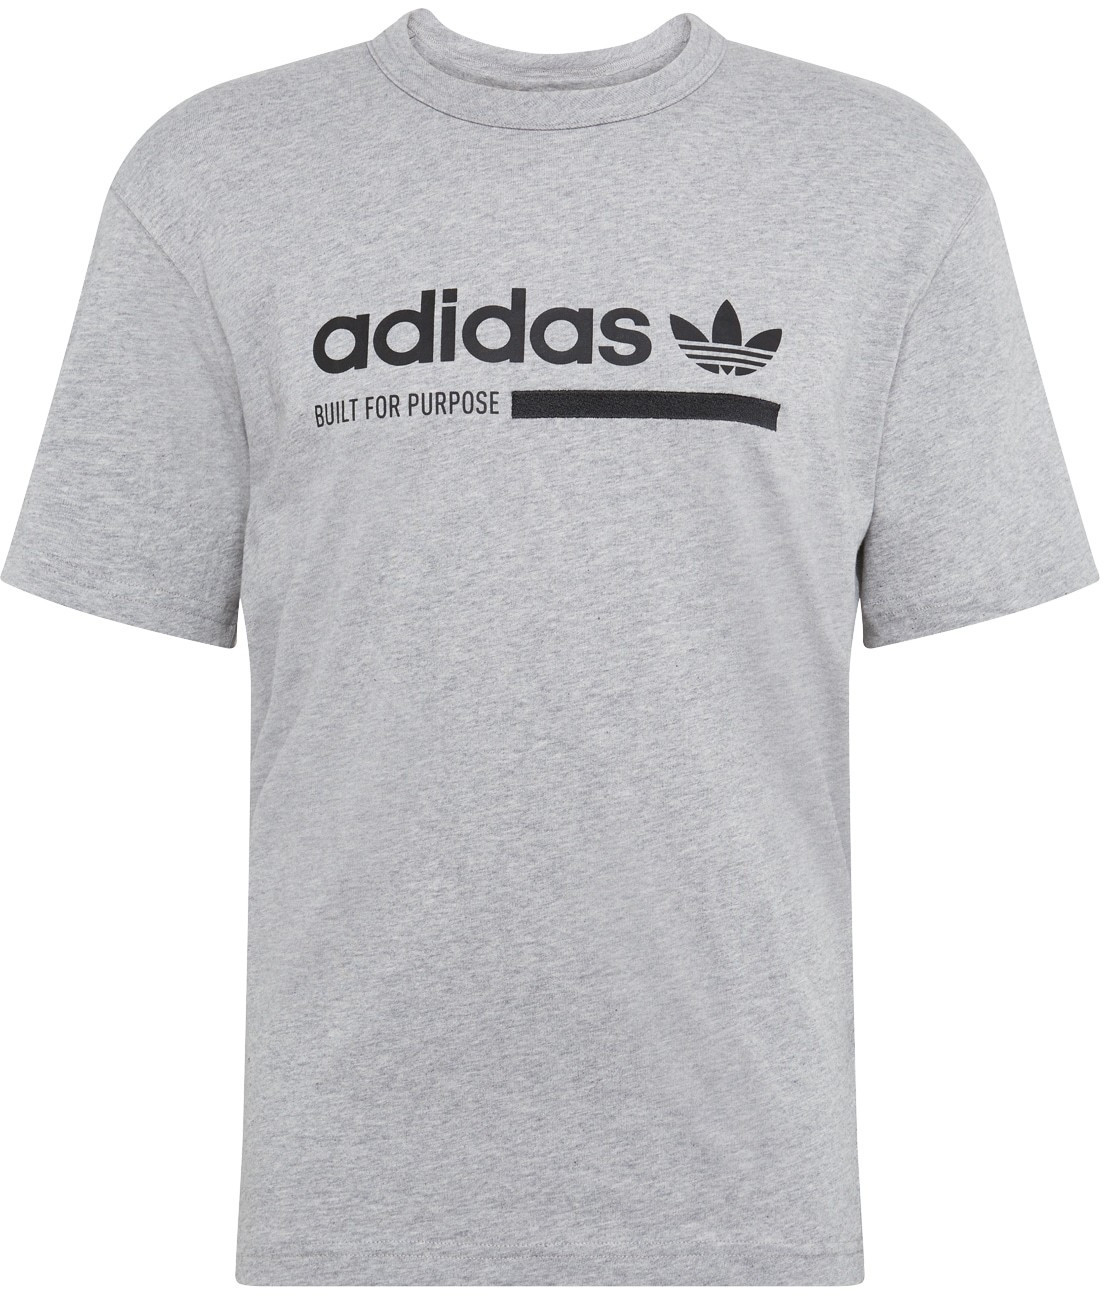 Adidas Kaval T-Shirt medium grey heather